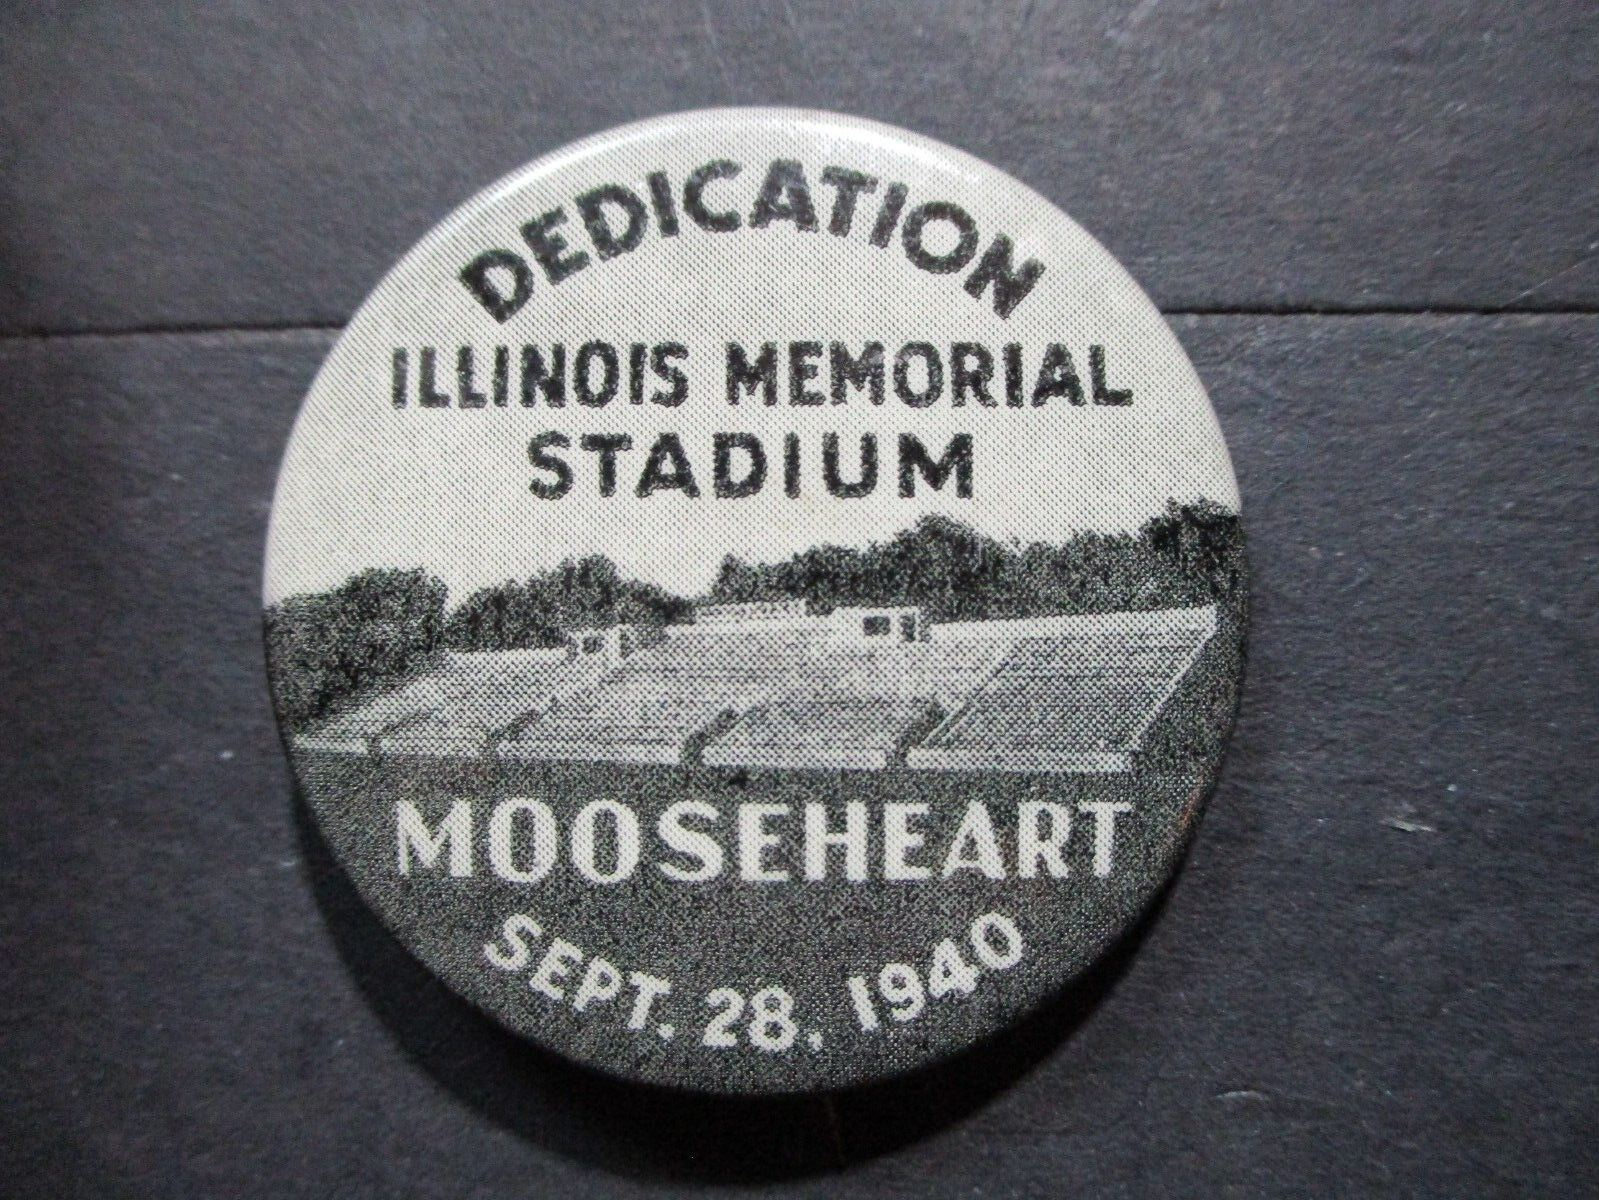 1940 Vintage DEDICATION Illinois Memorial Stadium MOOSEHEART Pinback Button